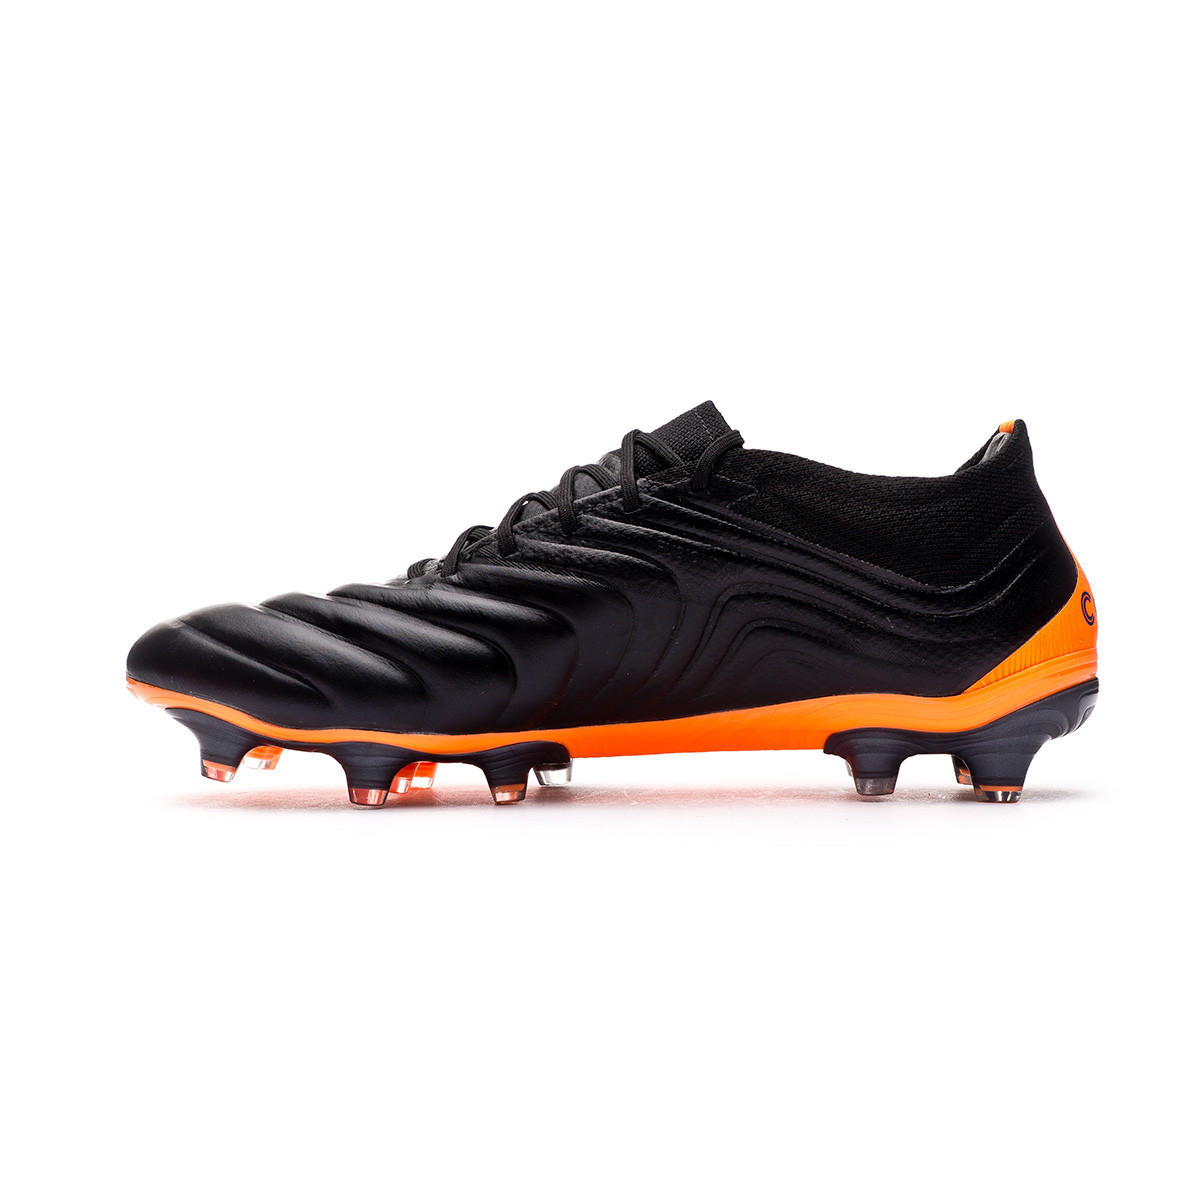 adidas orange football shoes